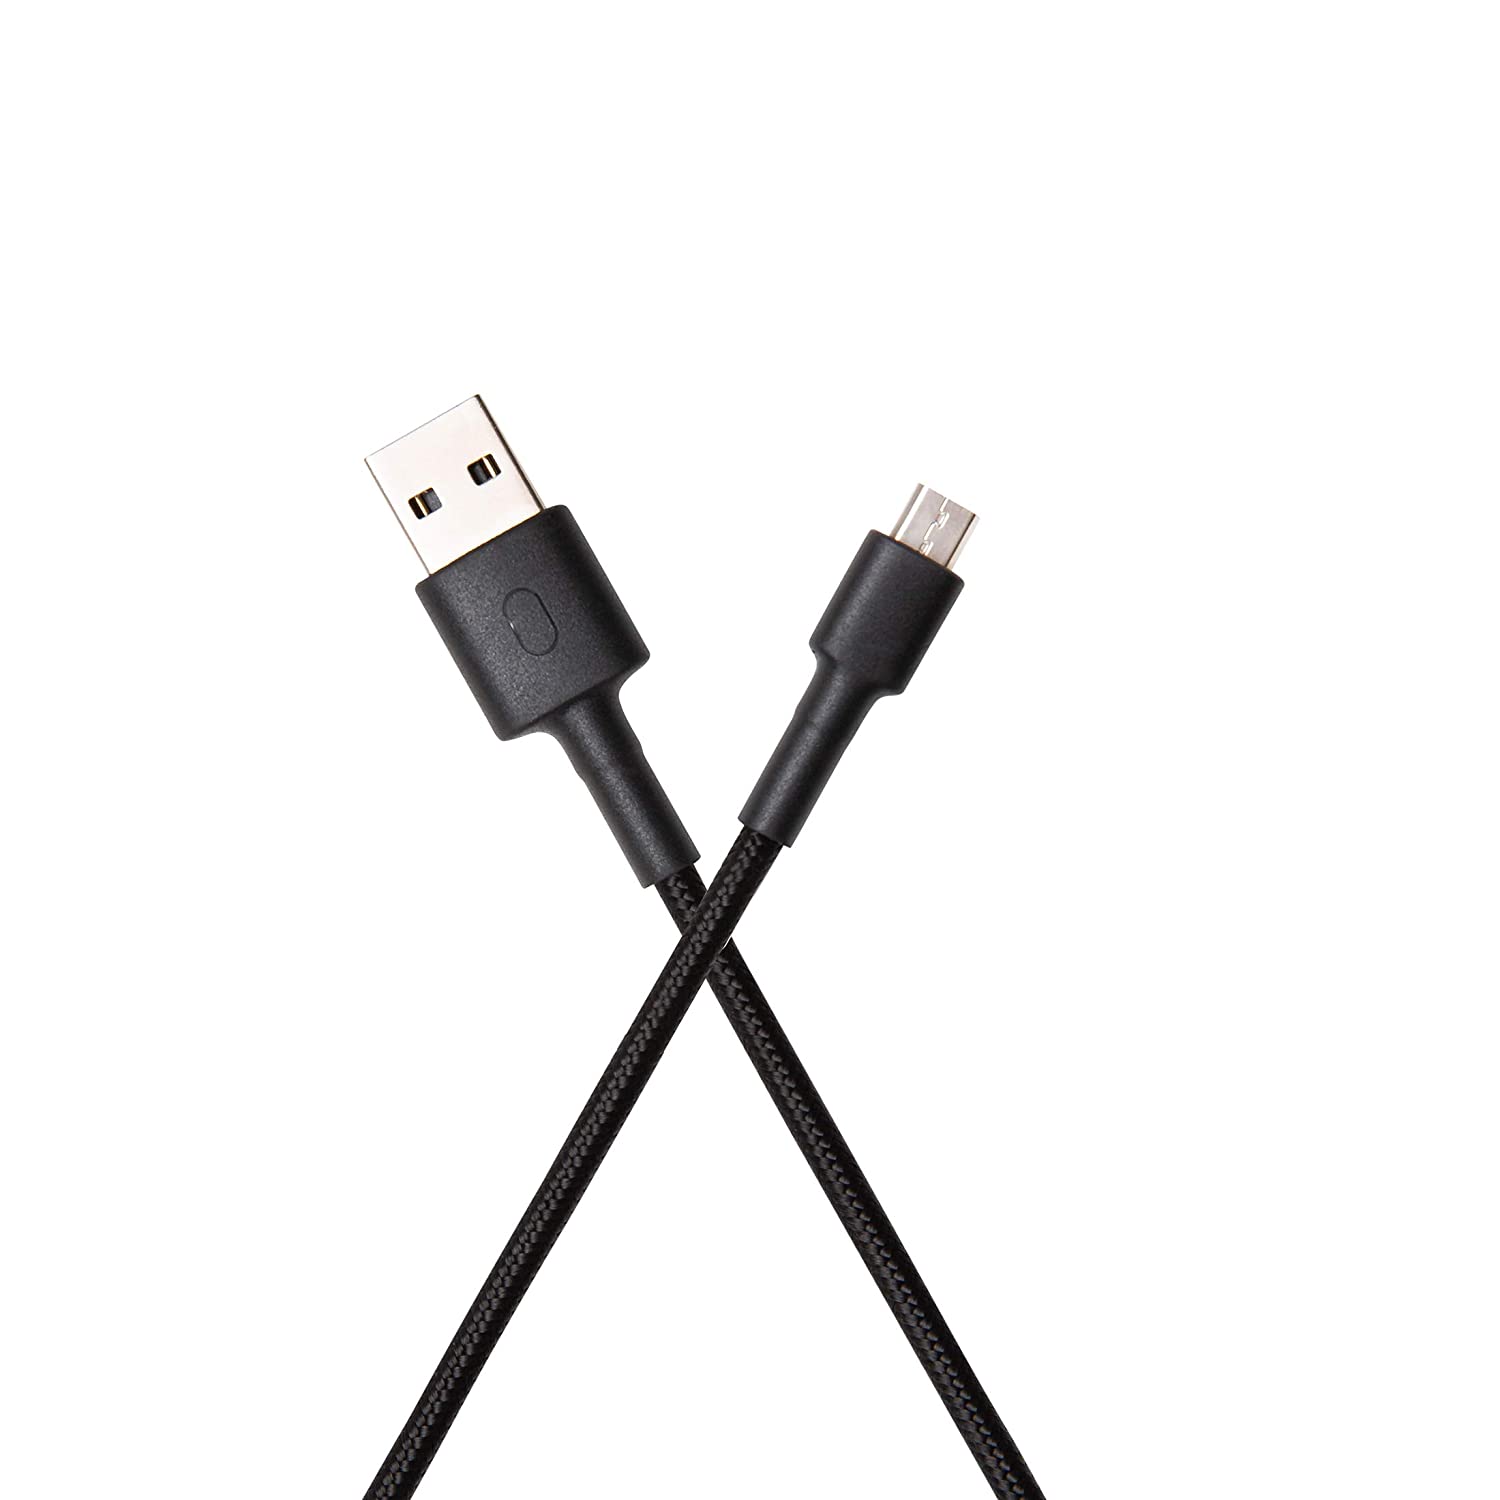 Mi Micro USB Braided Cable - 100cm Black